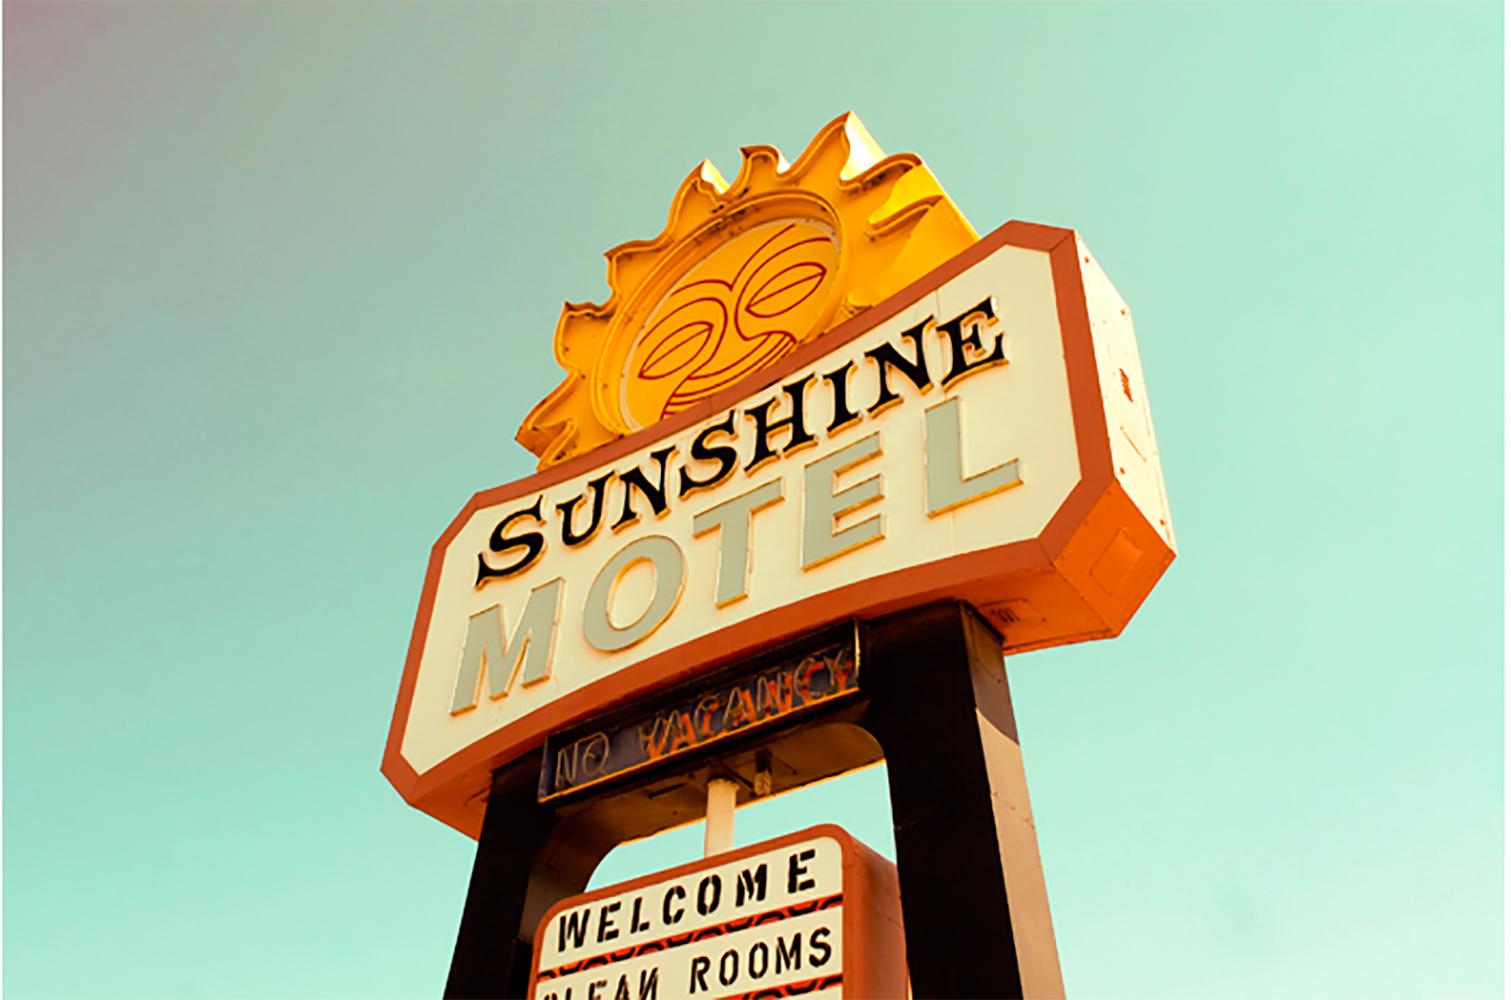 "Sunshine Motel" Limited Edition Type C Metallic Print  - Photograph by Jen Zahigian